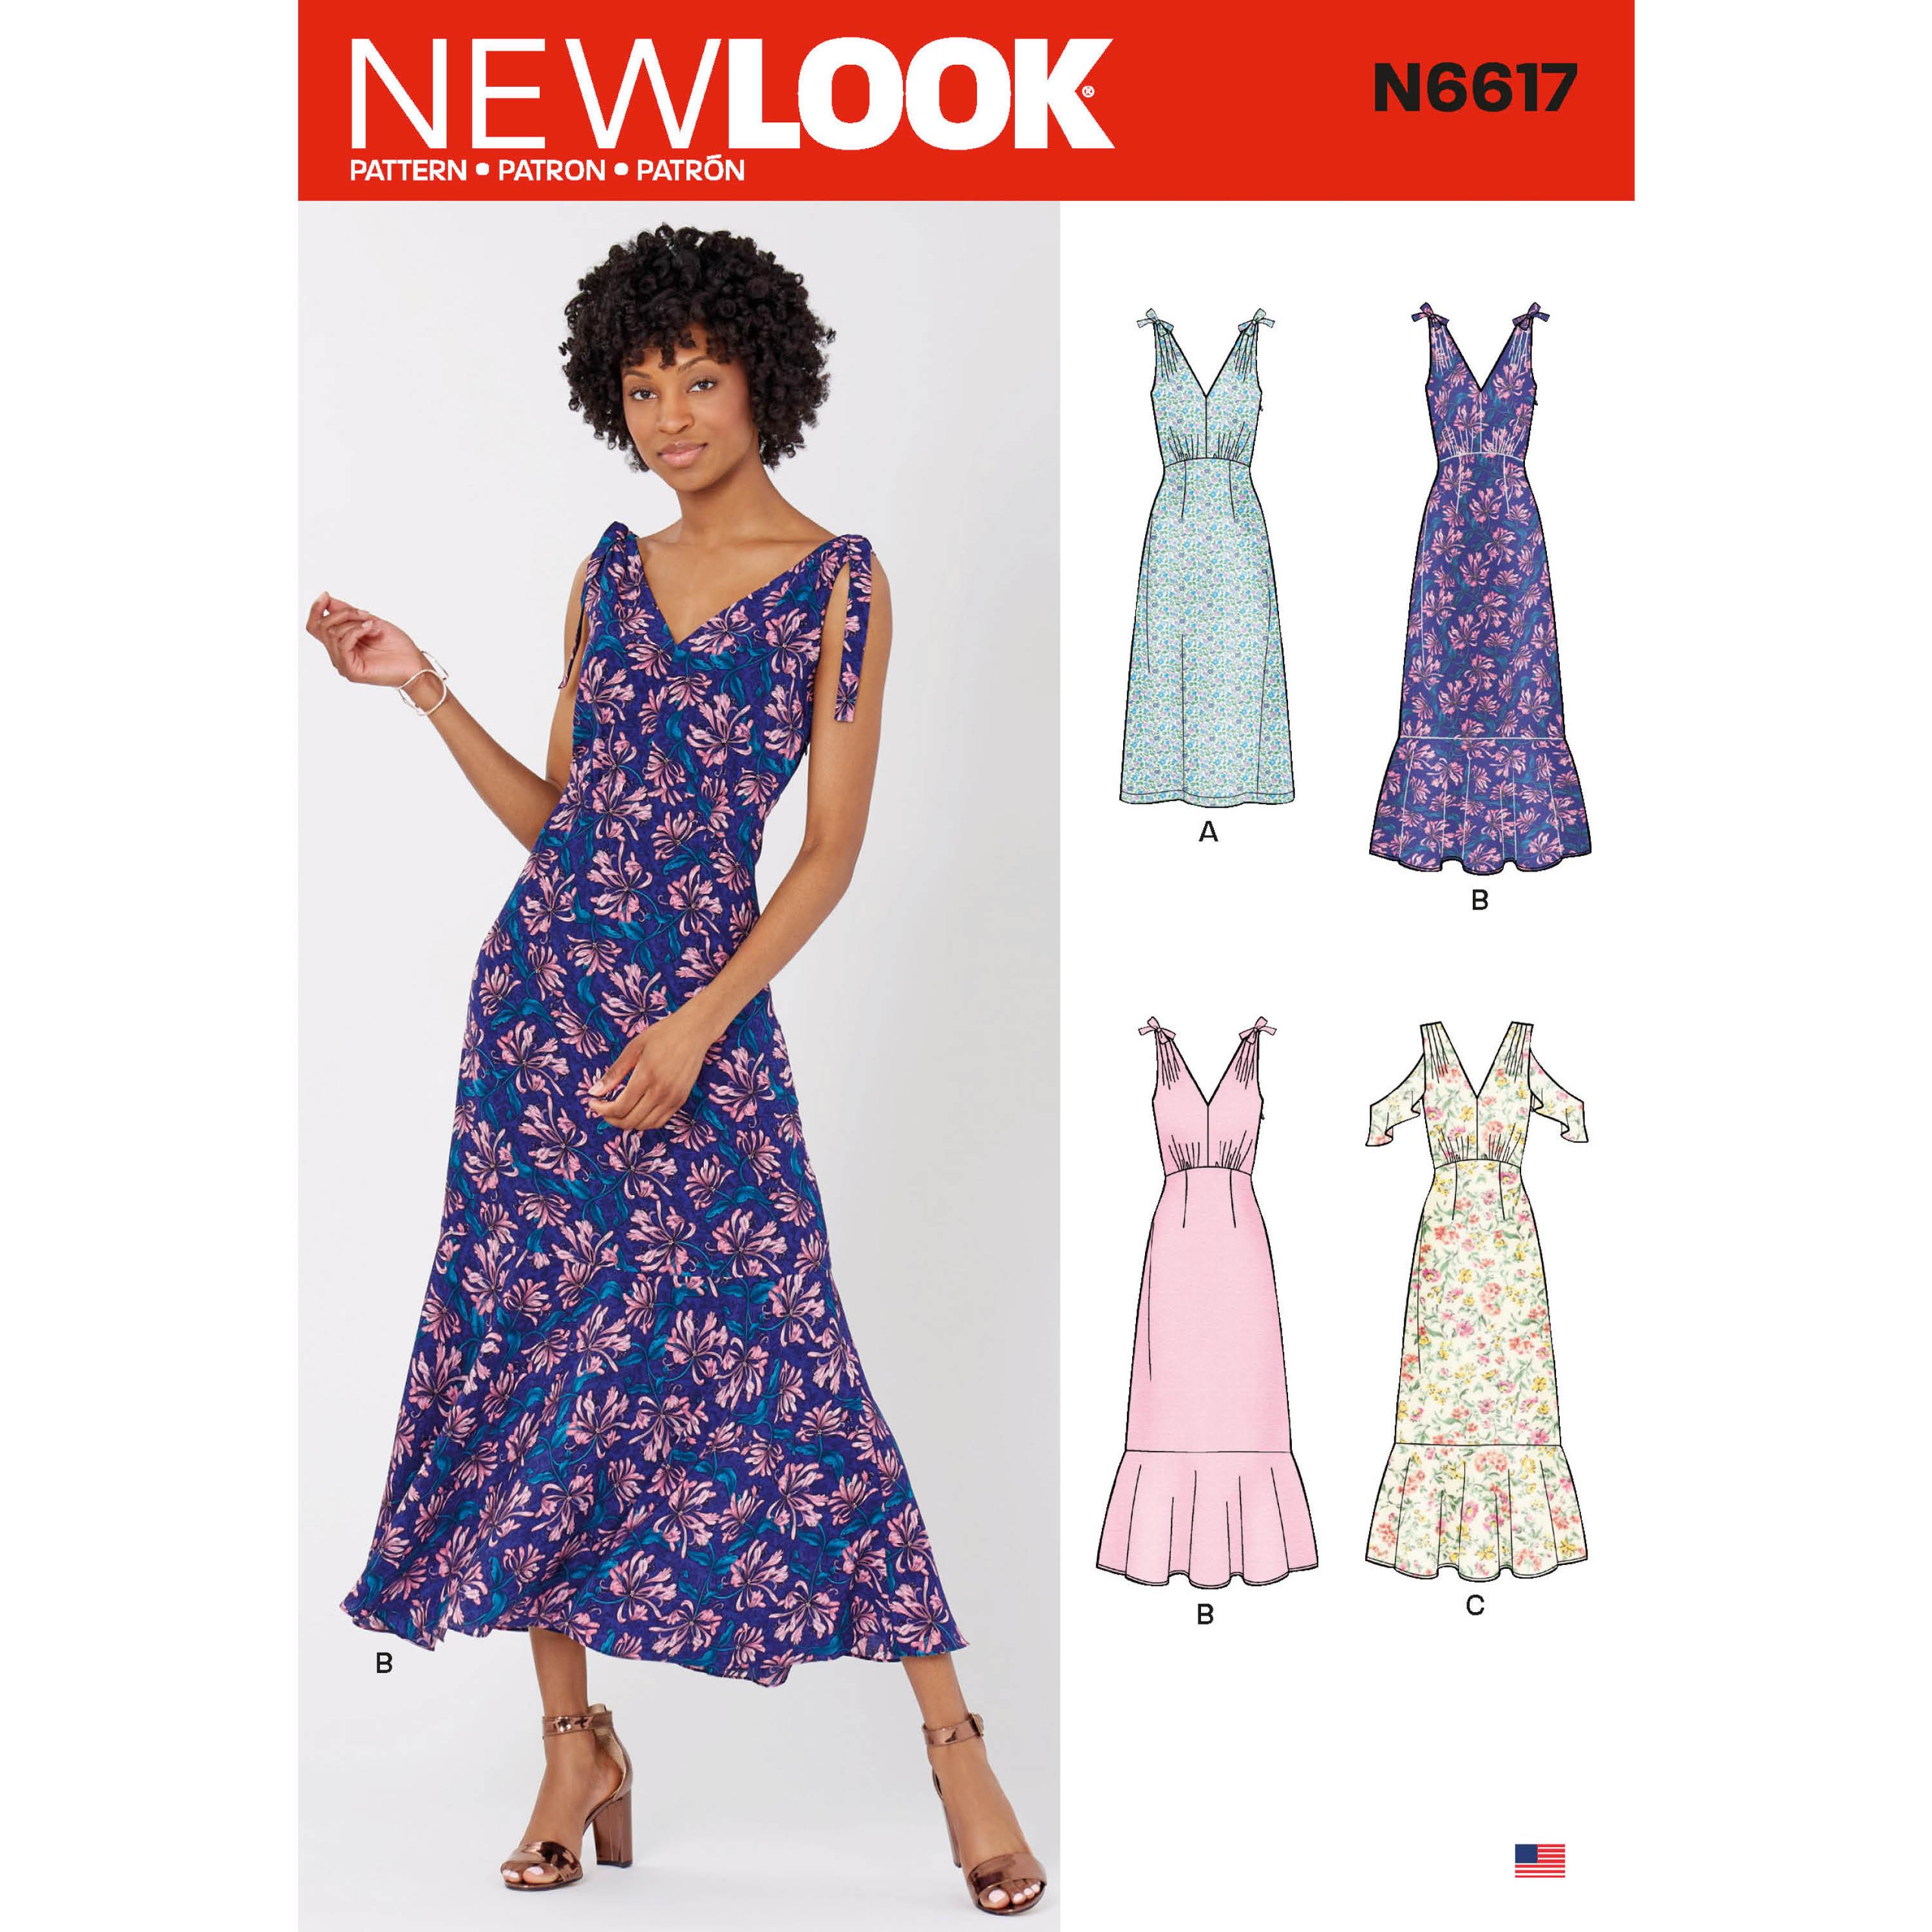 NewLook Sewing Pattern N6617 Misses' Dresses